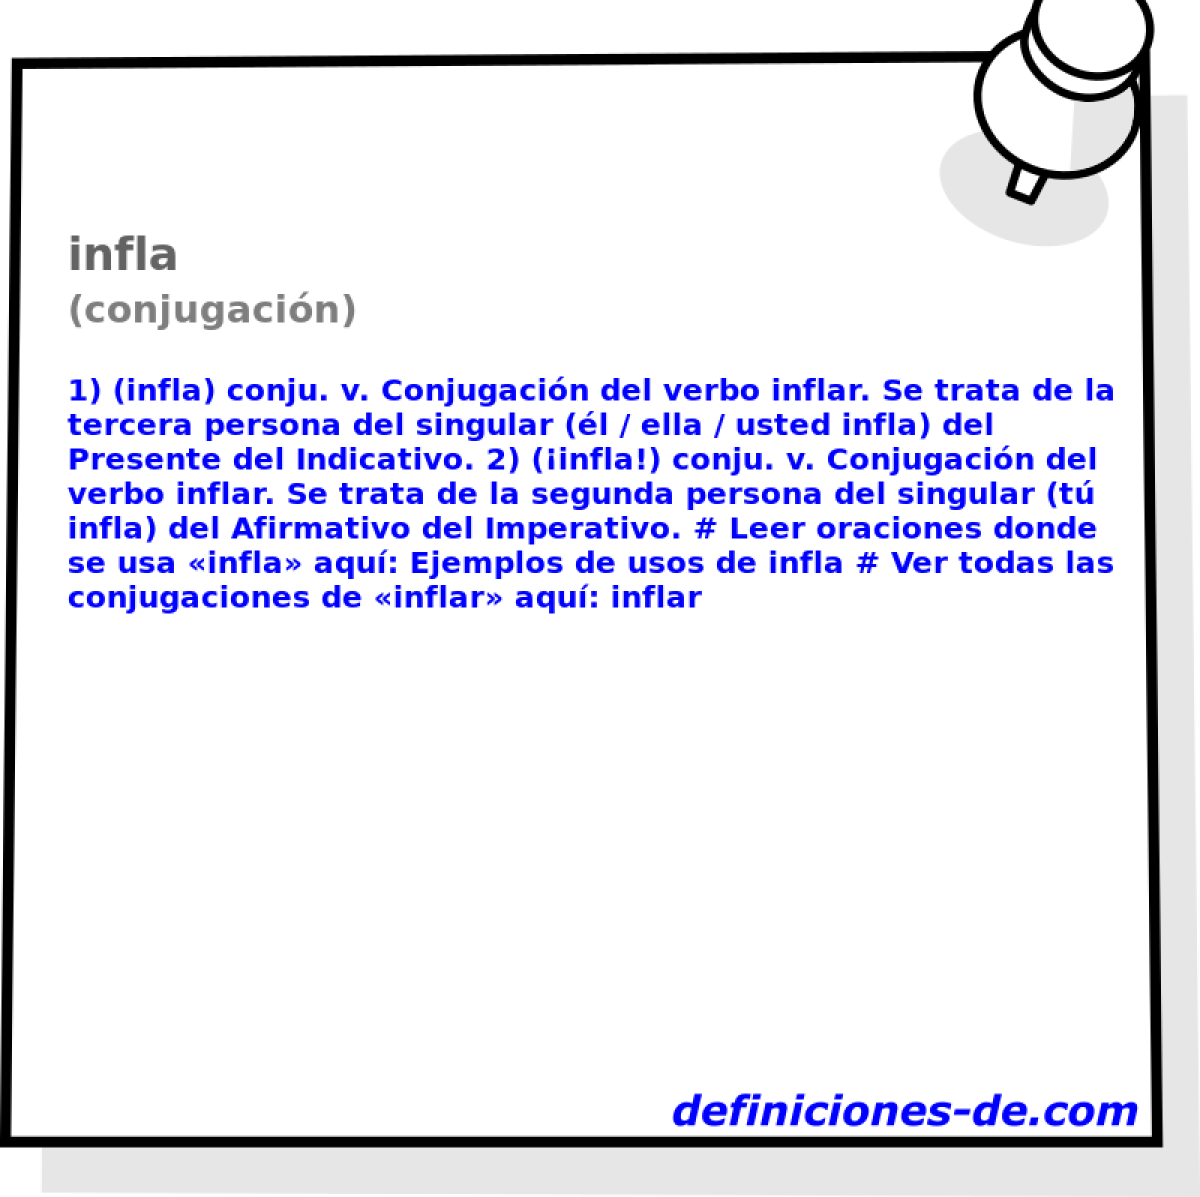 infla (conjugacin)